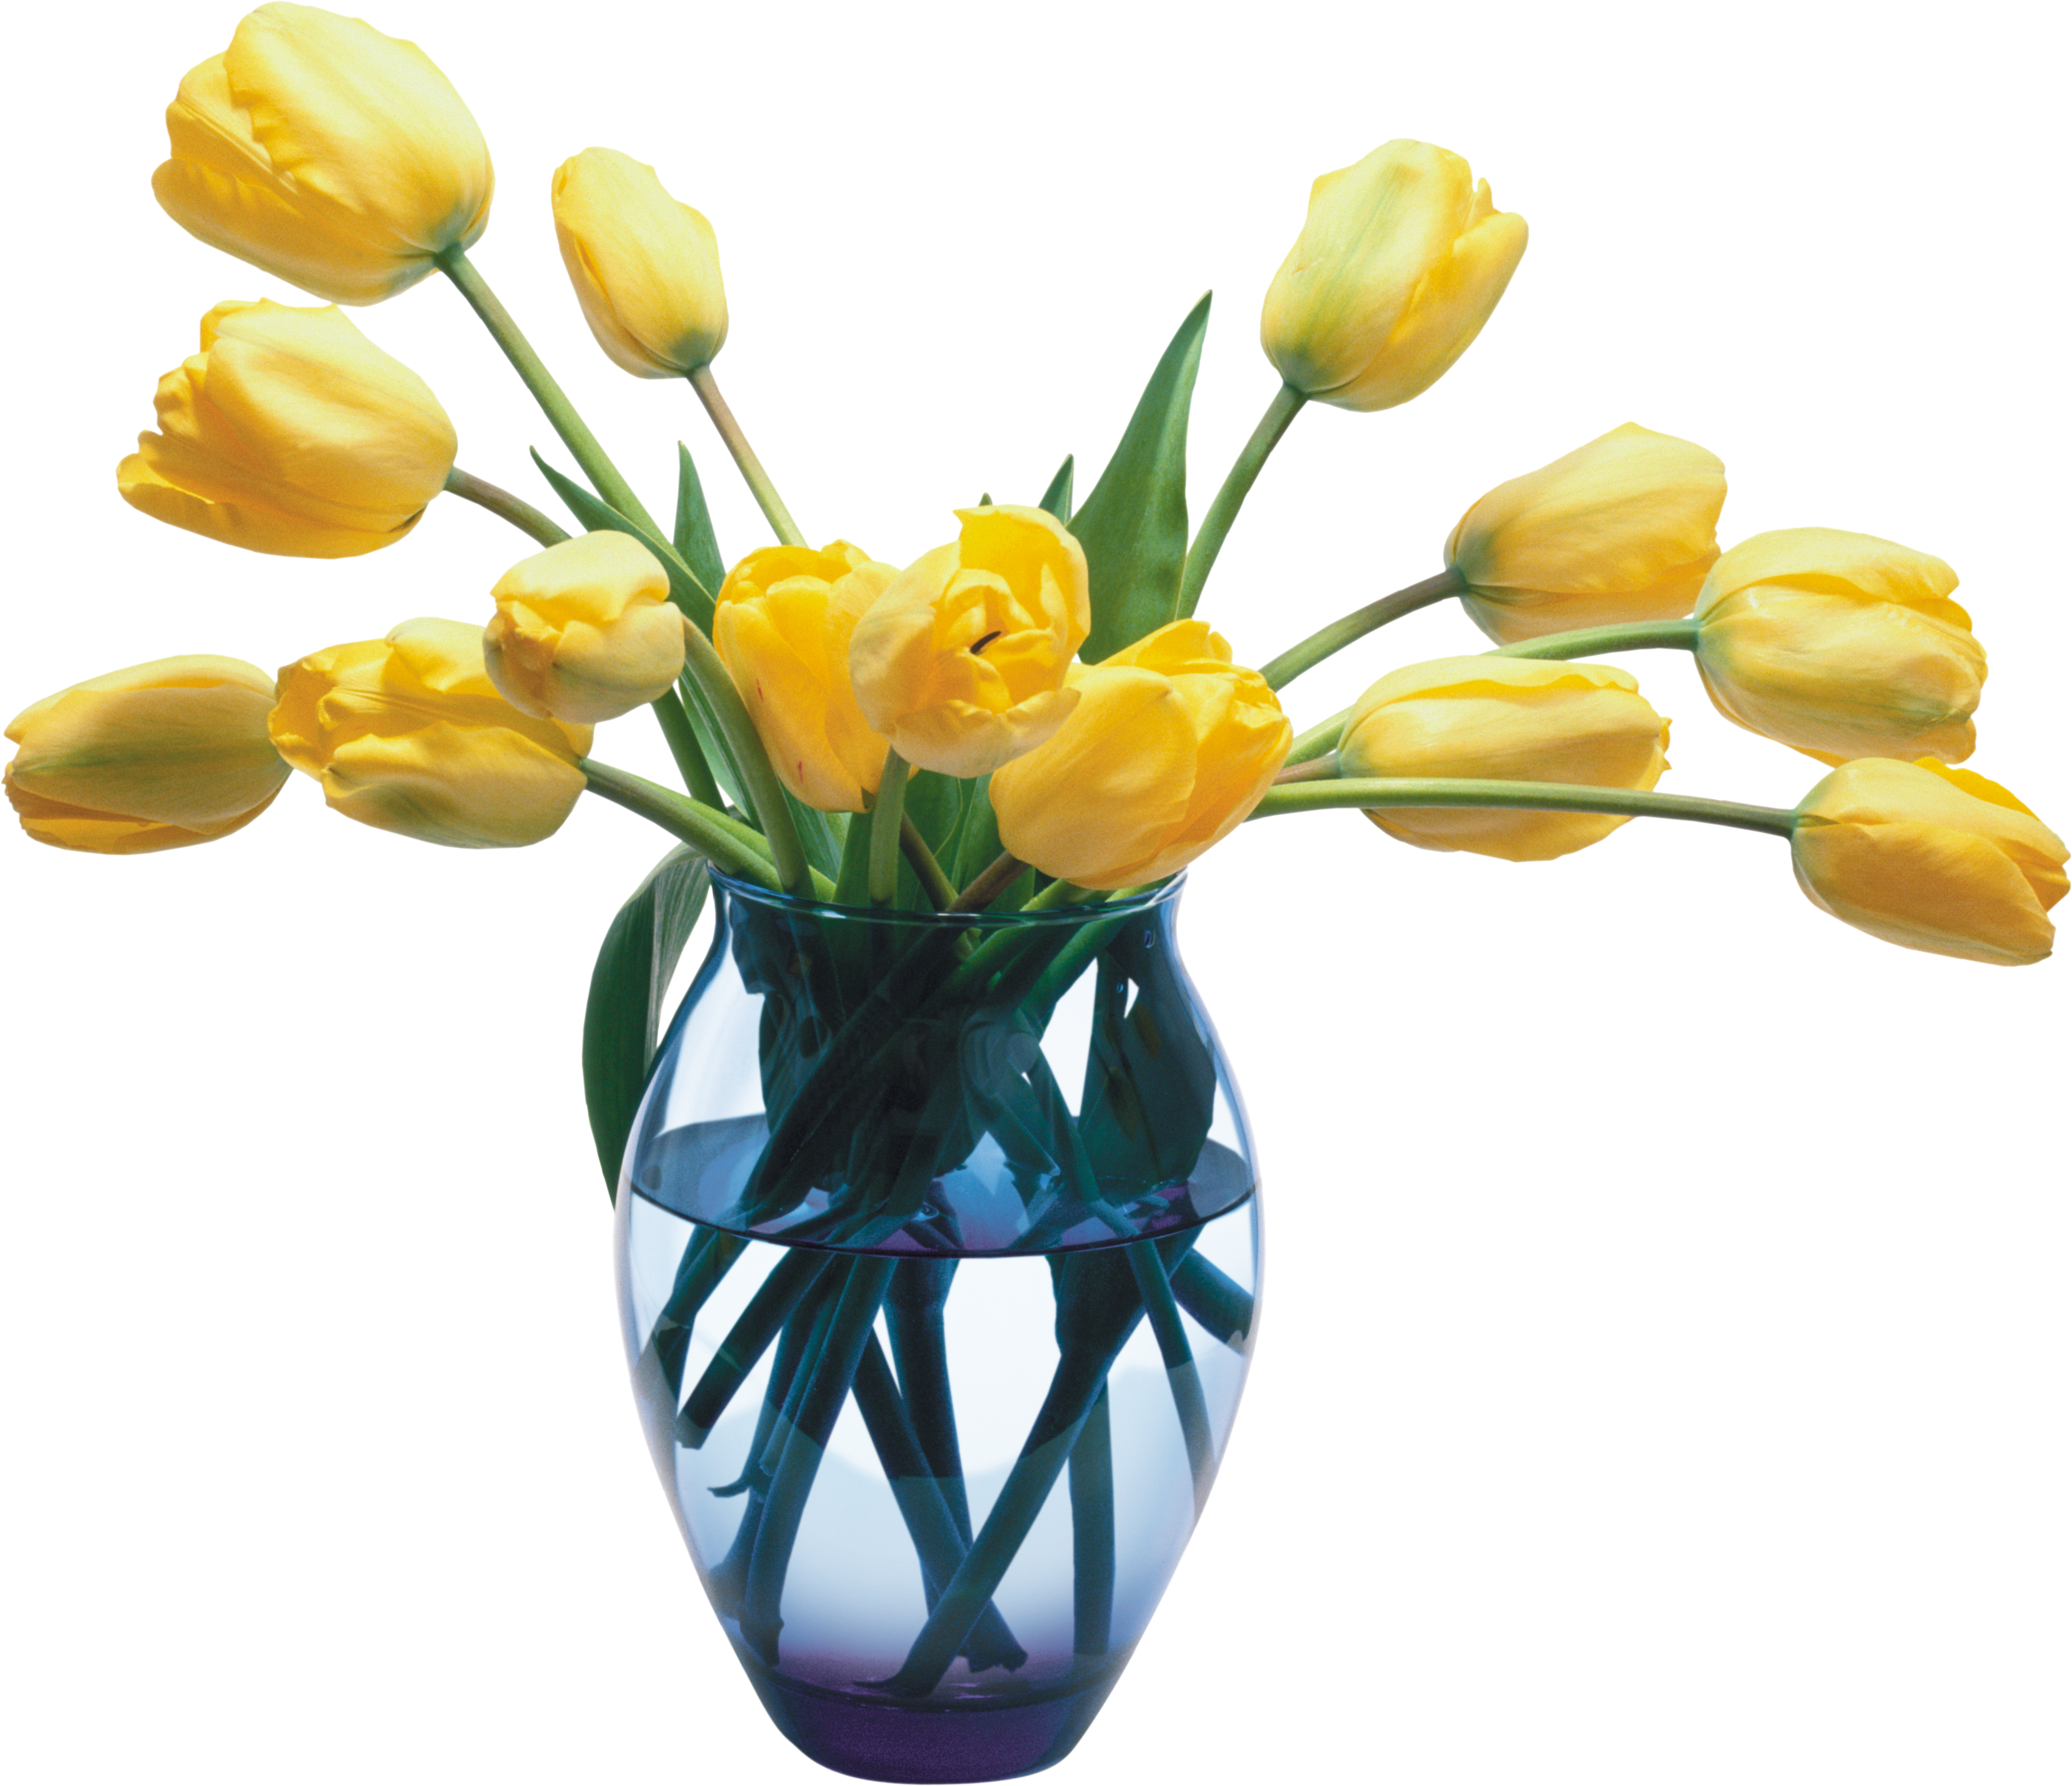 Images free download. Vase clipart tulip png